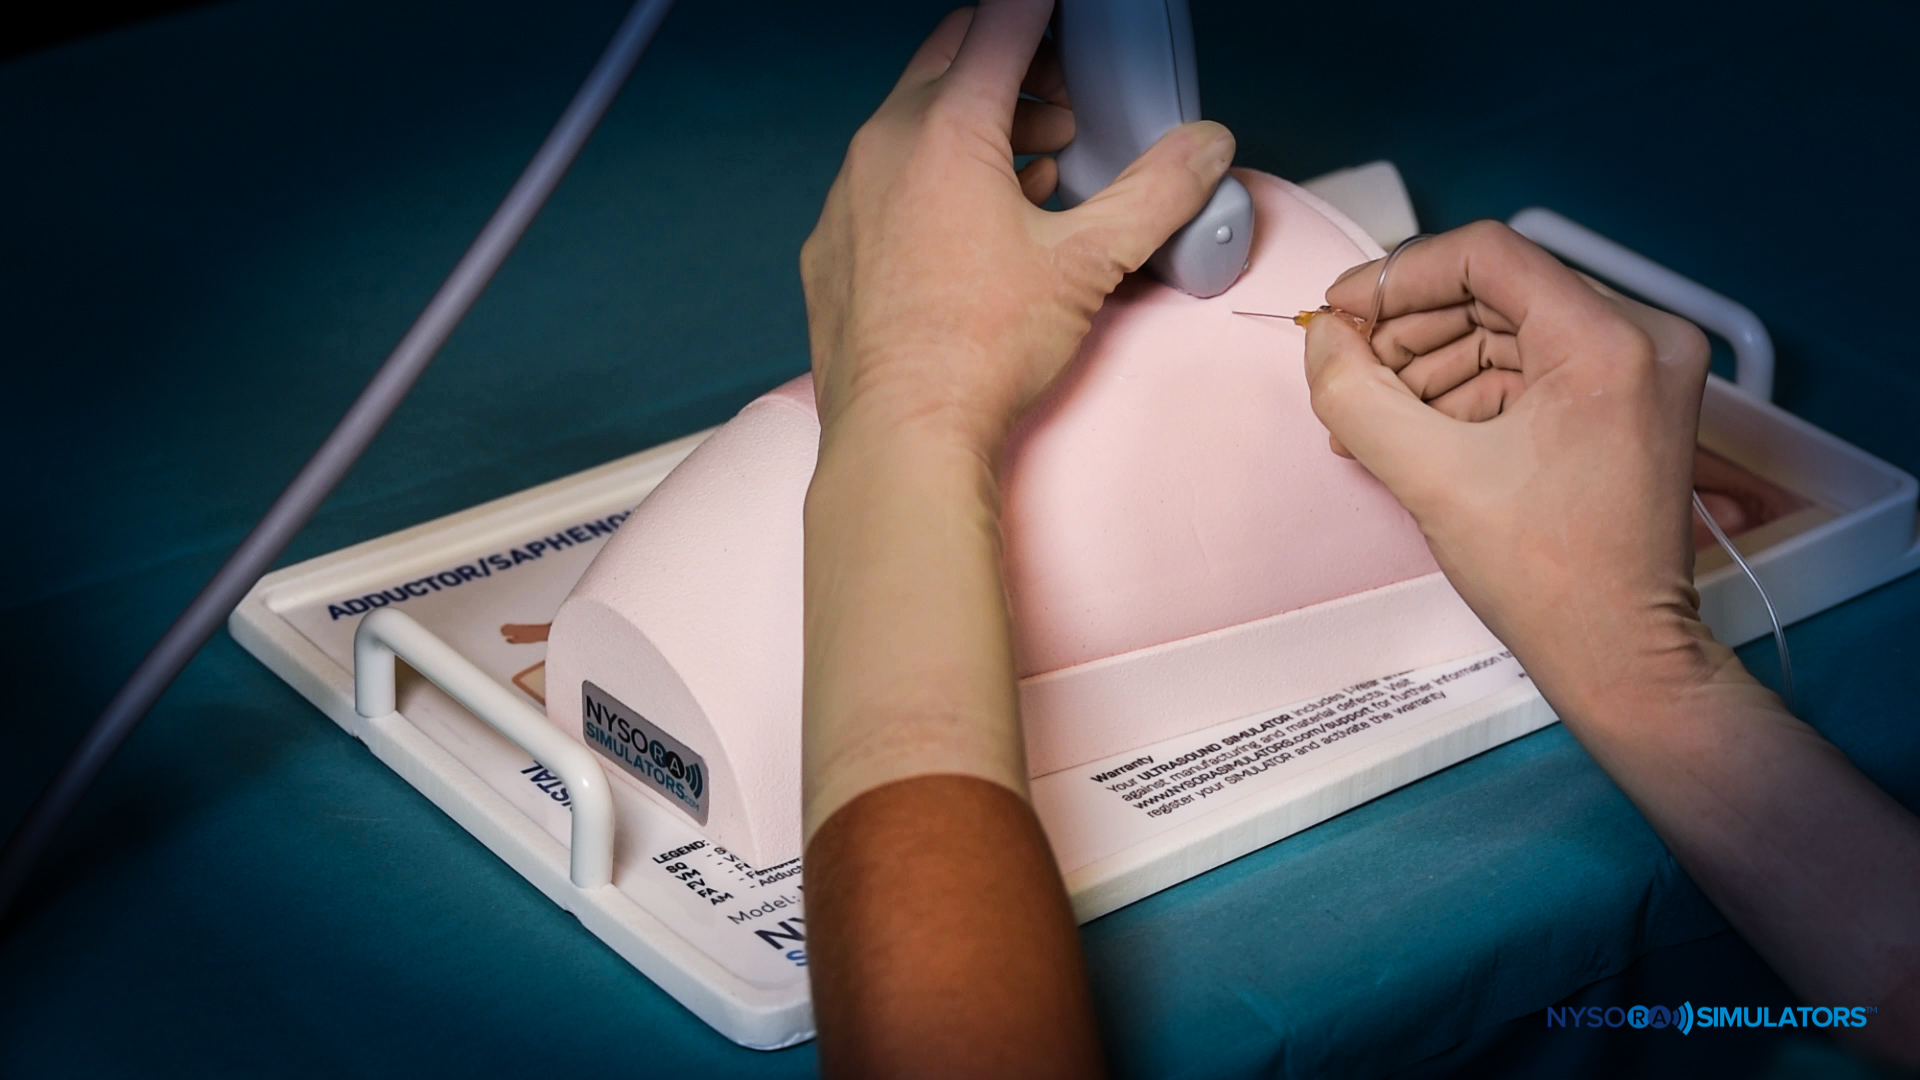 Valkyrie Simulators on LinkedIn: Regional Anesthesia Nerve Block Simulator  Ultrasound Scan